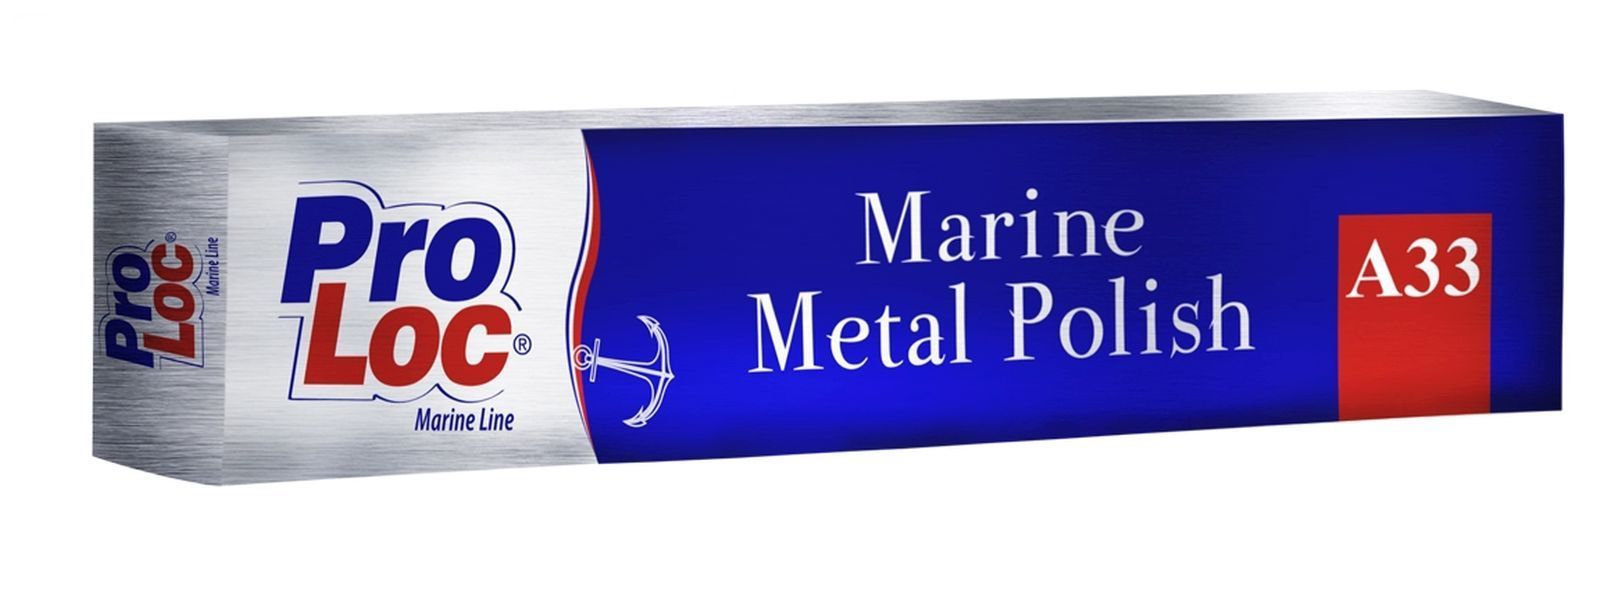 PROLOC - Marine Metal Polish A33 - Metallpolitur